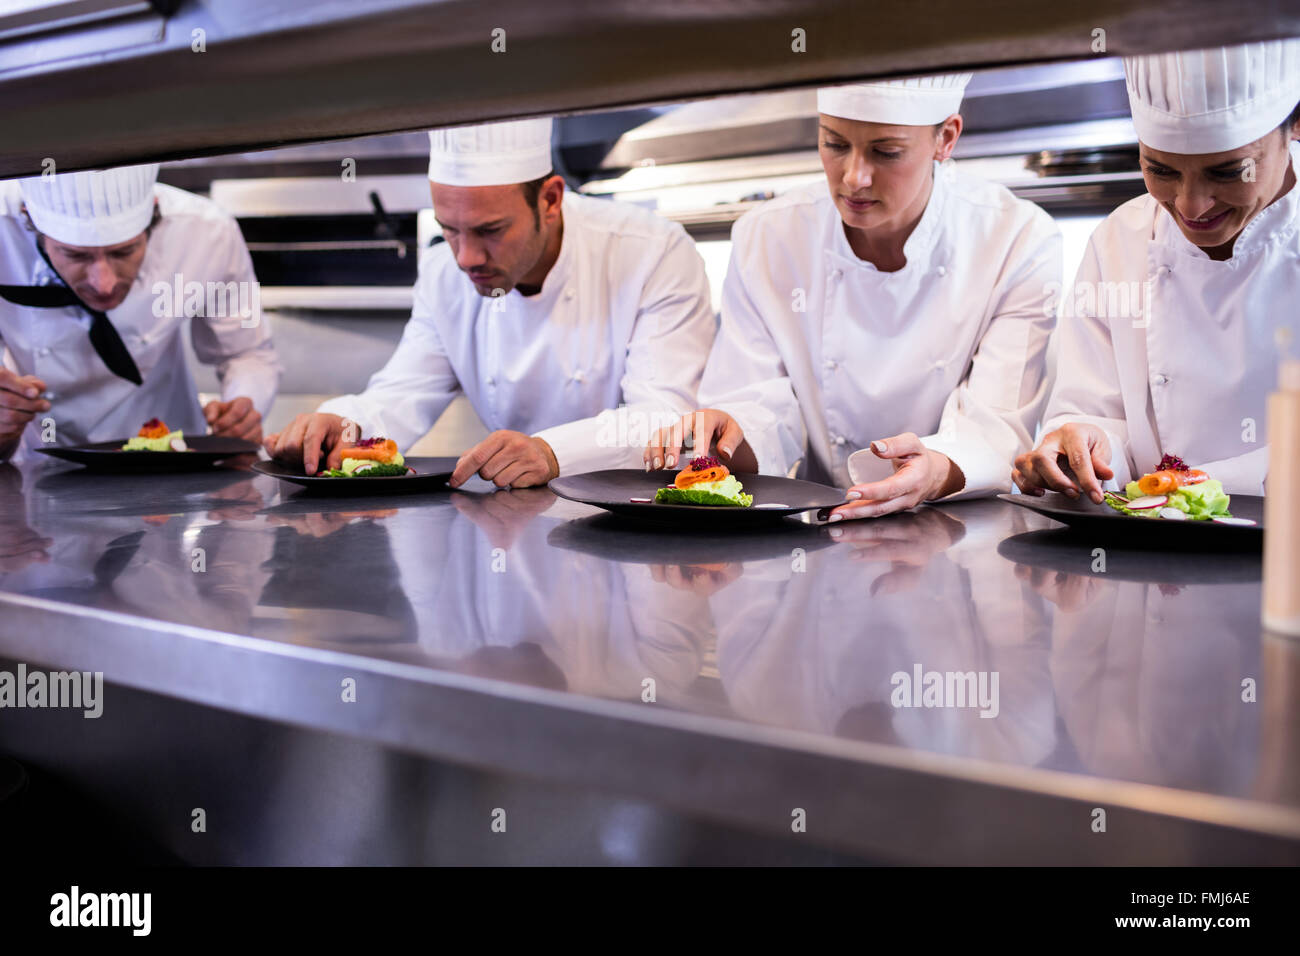 Team of chefs garnishing dishes Stock Photo